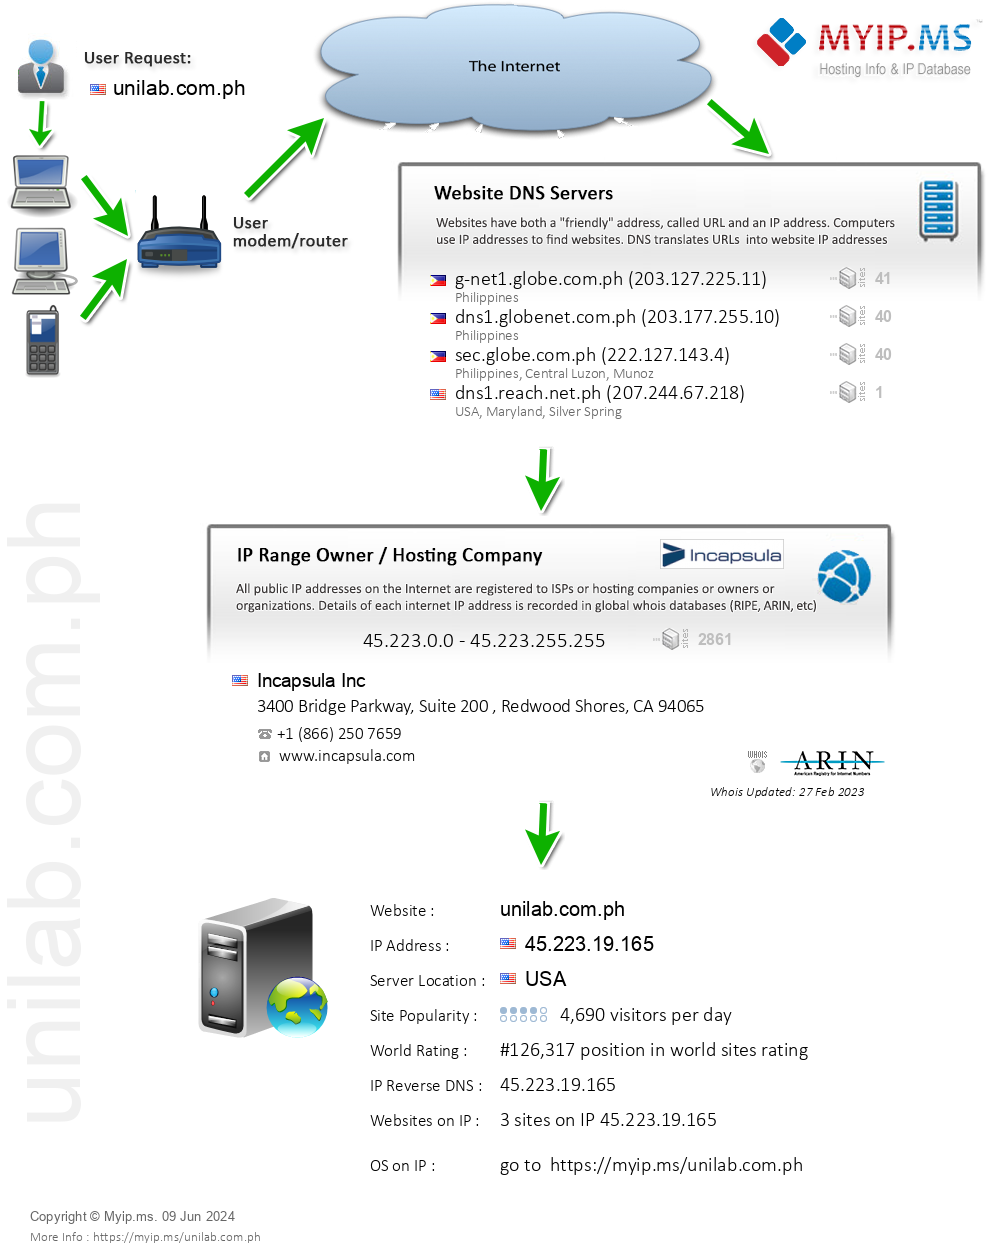 Unilab.com.ph - Website Hosting Visual IP Diagram